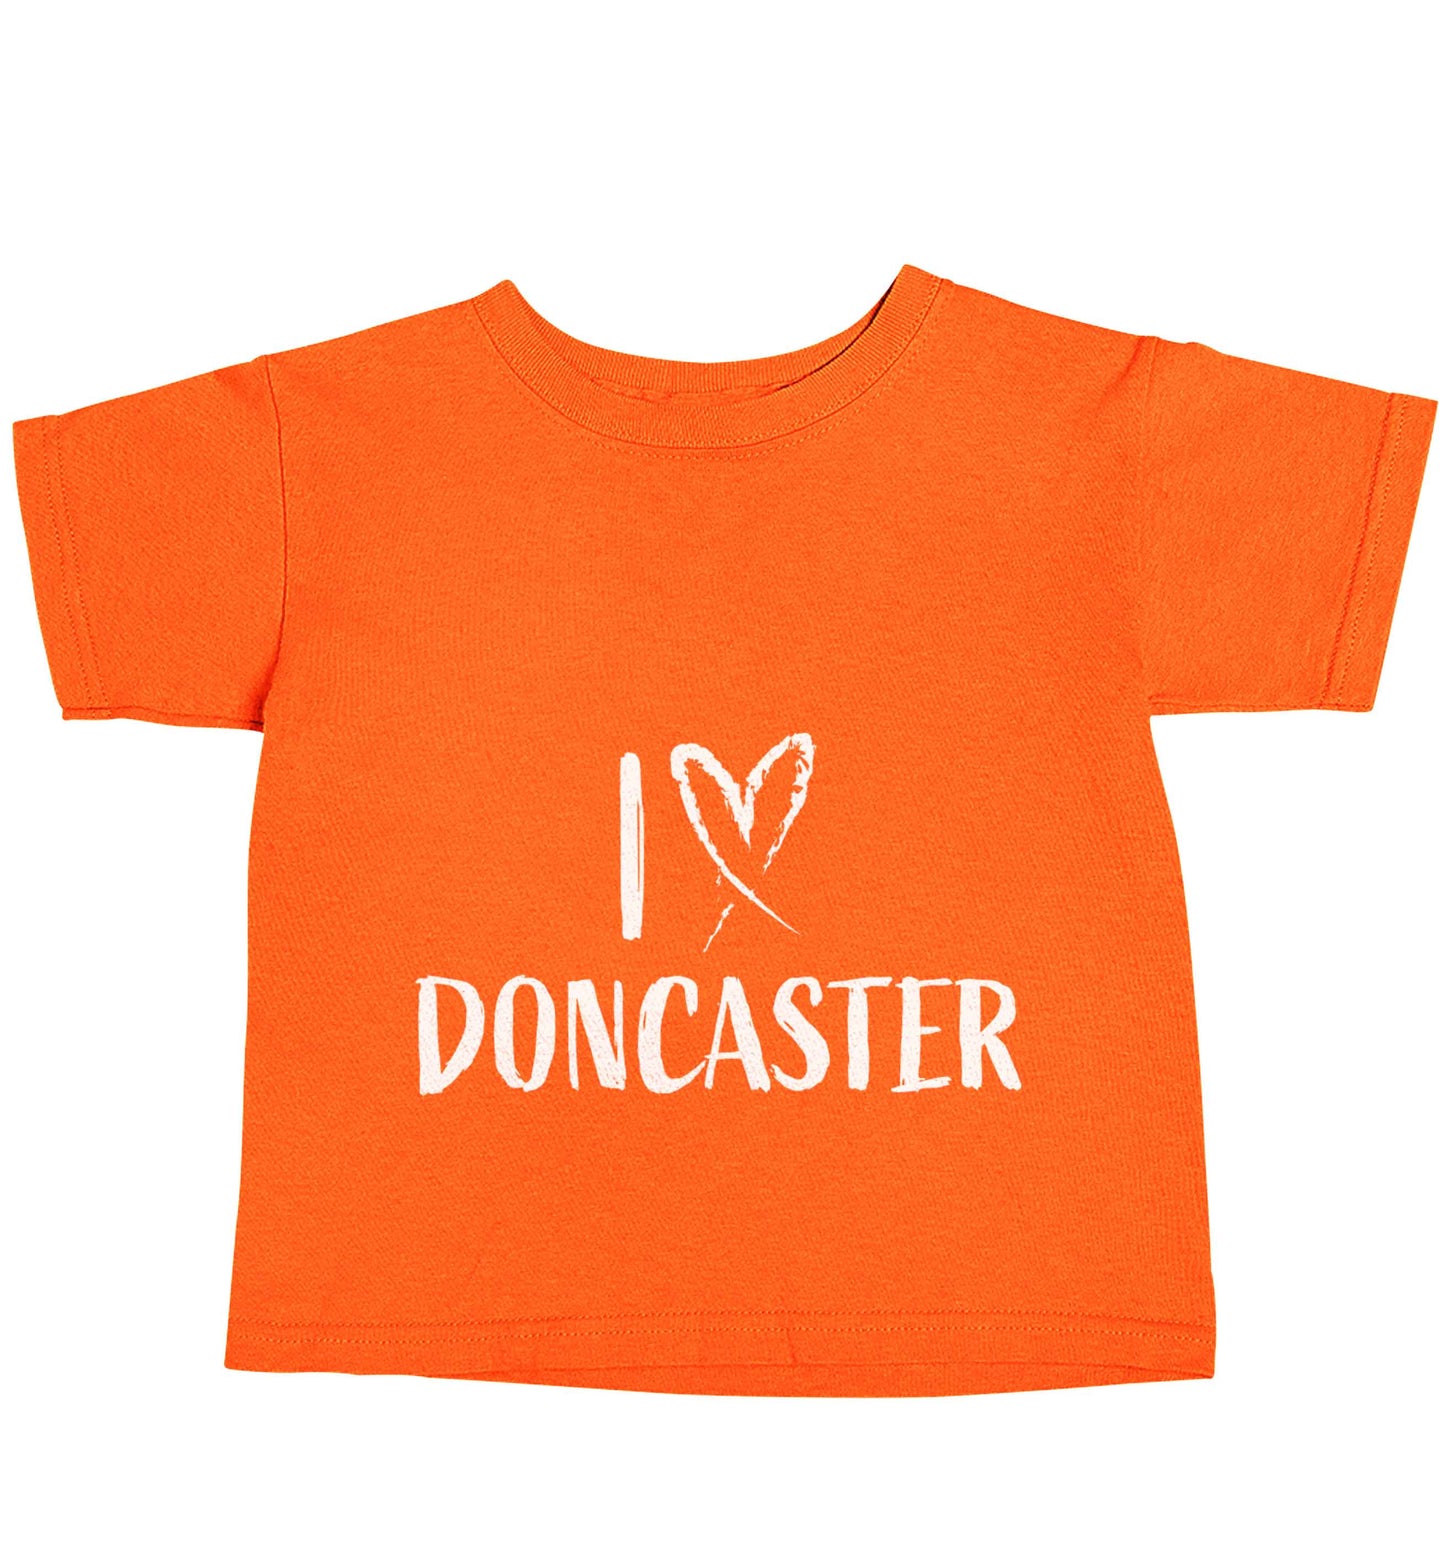 I love Doncaster orange baby toddler Tshirt 2 Years